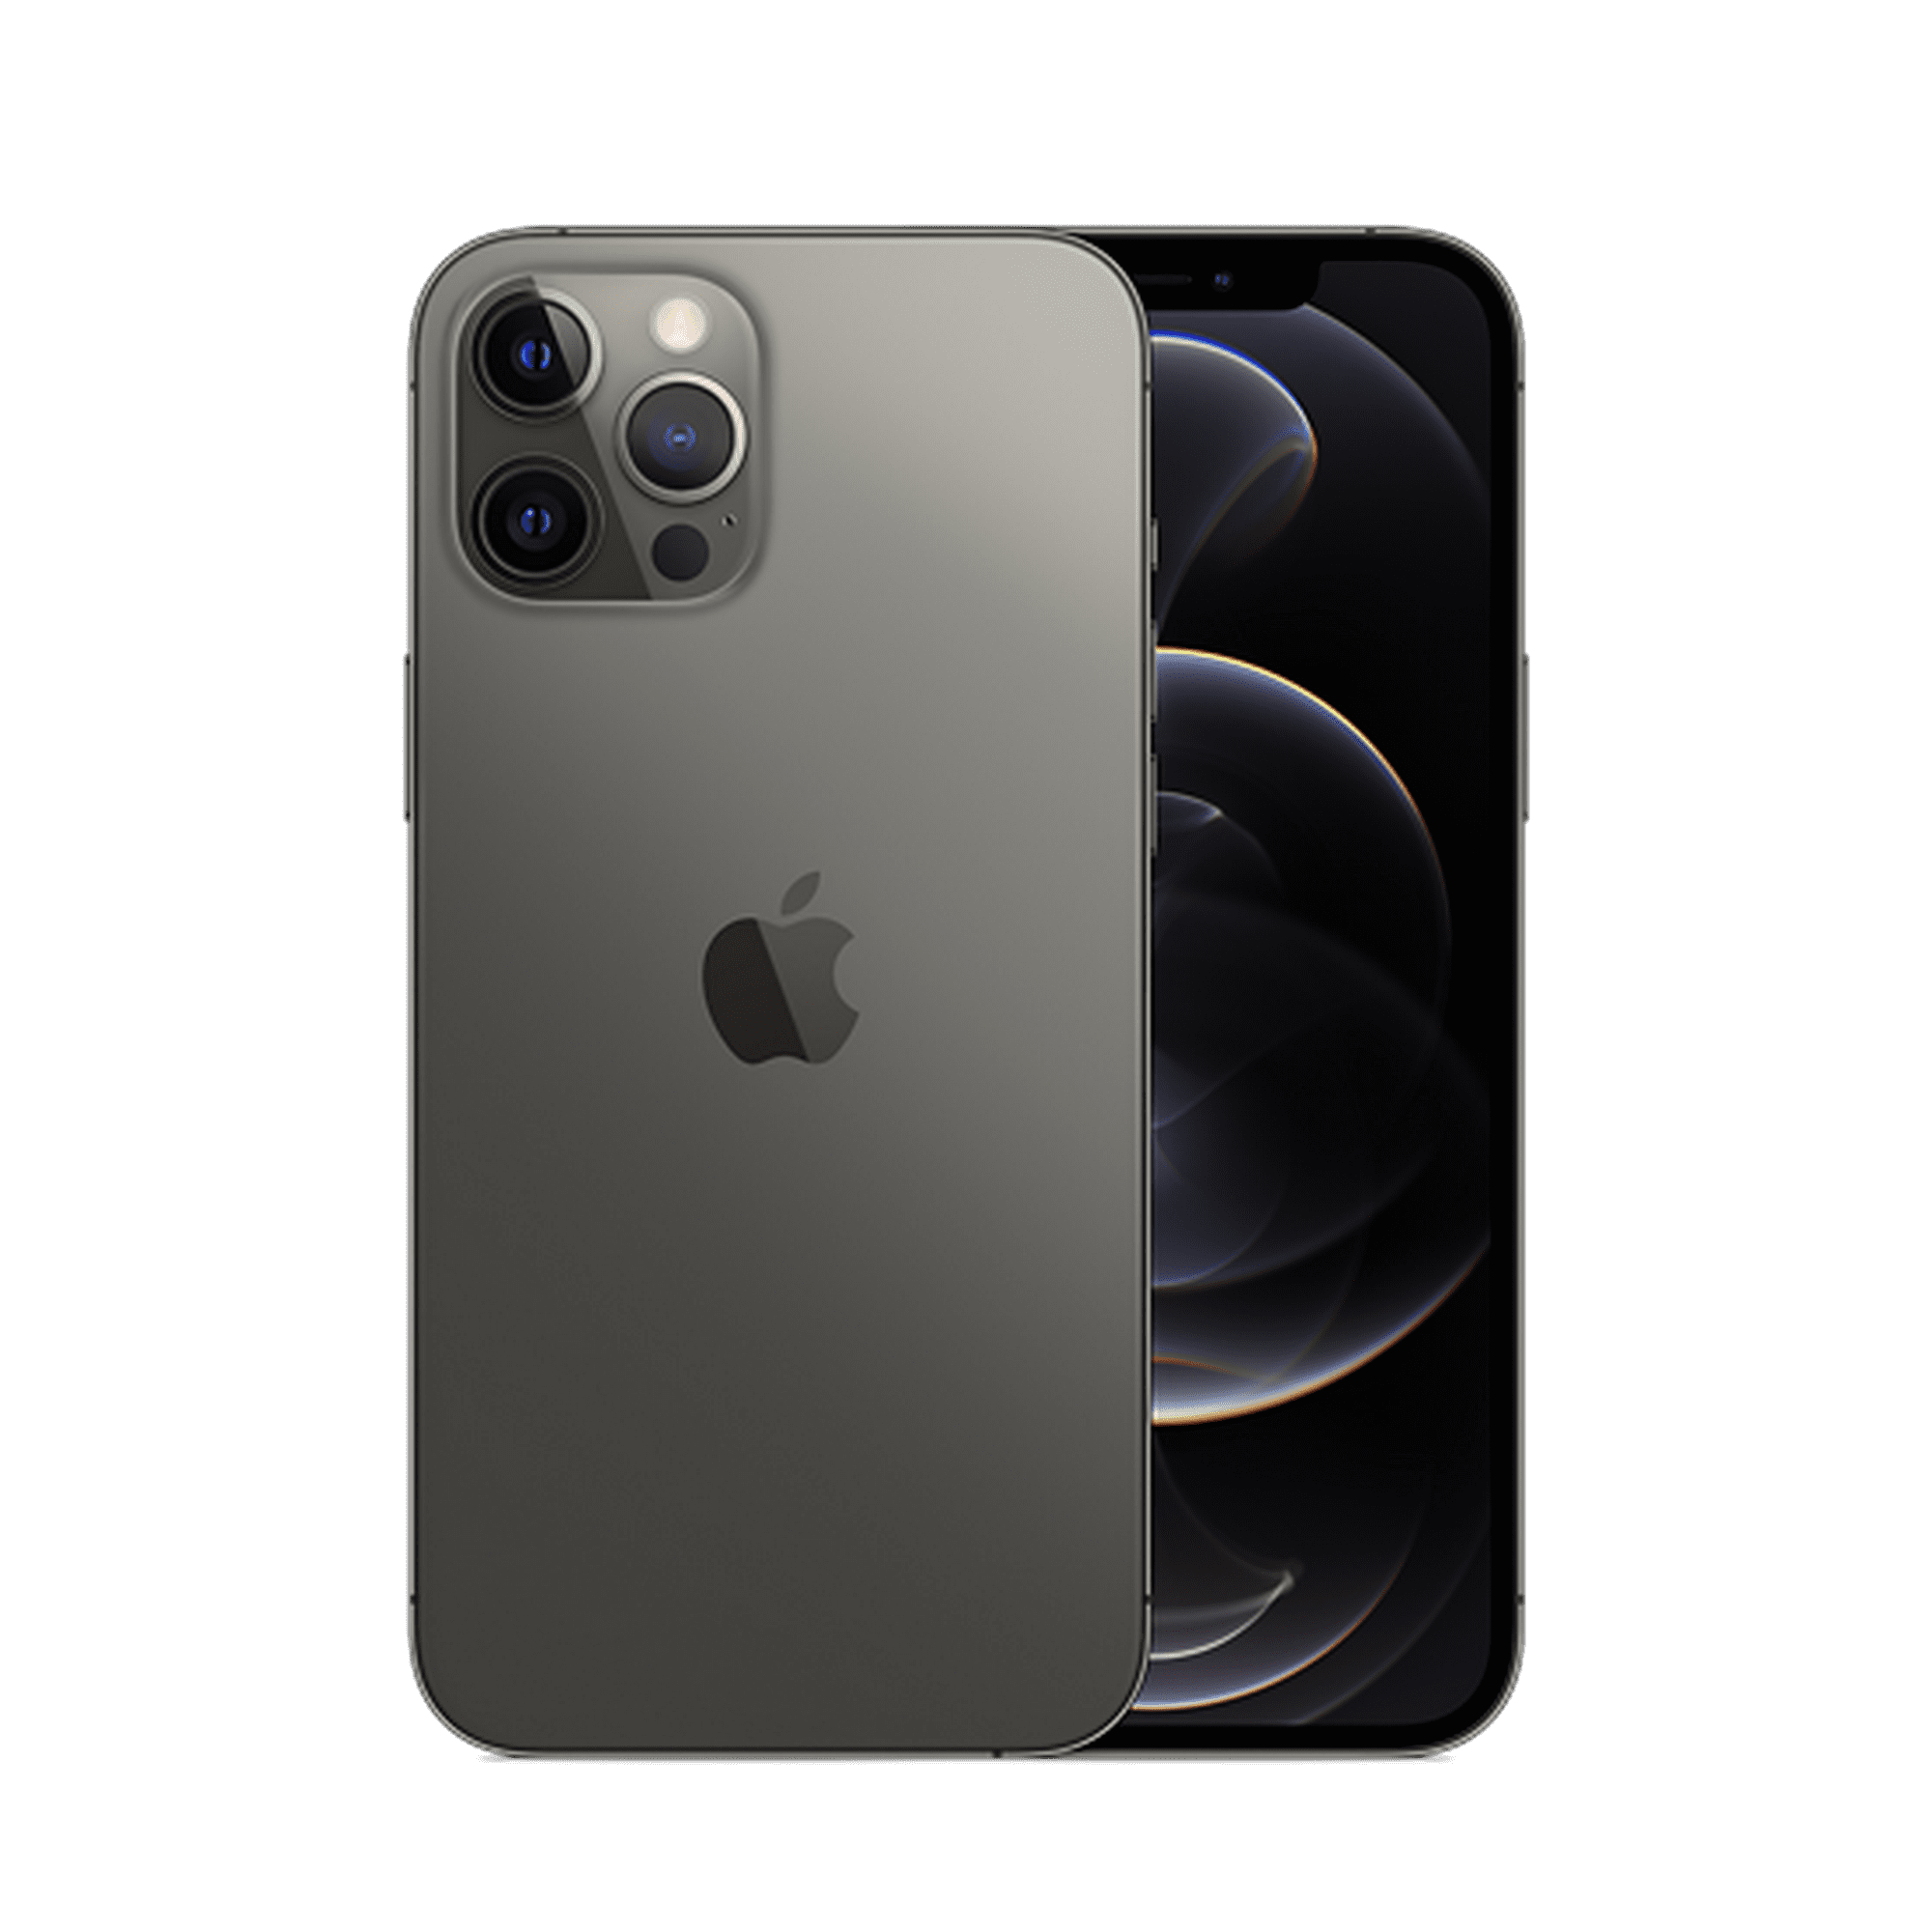 Apple iPhone 12 Pro Max 256GB 5G - Factory Unlocked Smartphone 